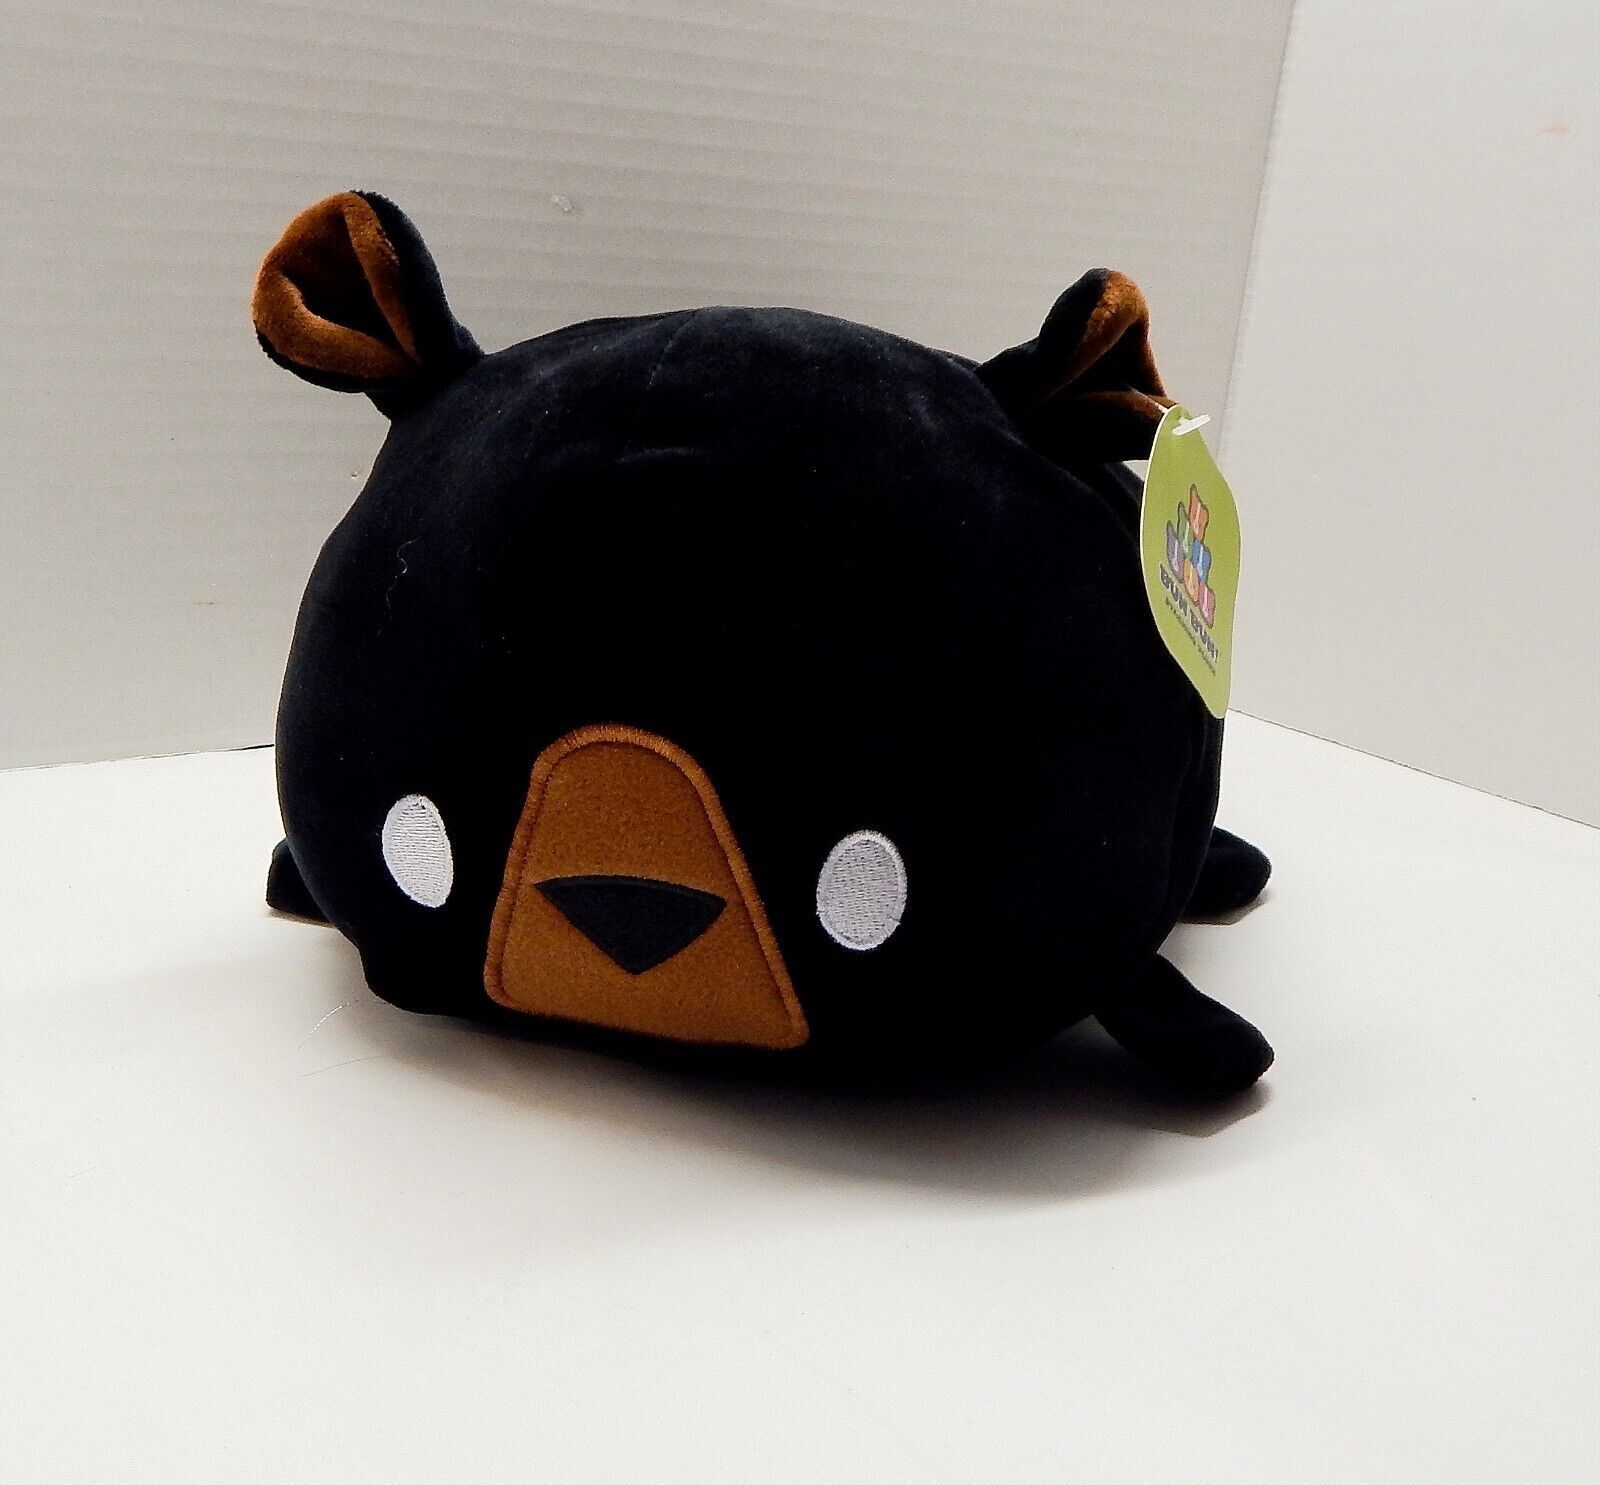 Primary image for Bun Bun Stacking Plush Stuffed Animal Black Embroidered Eyes Tag